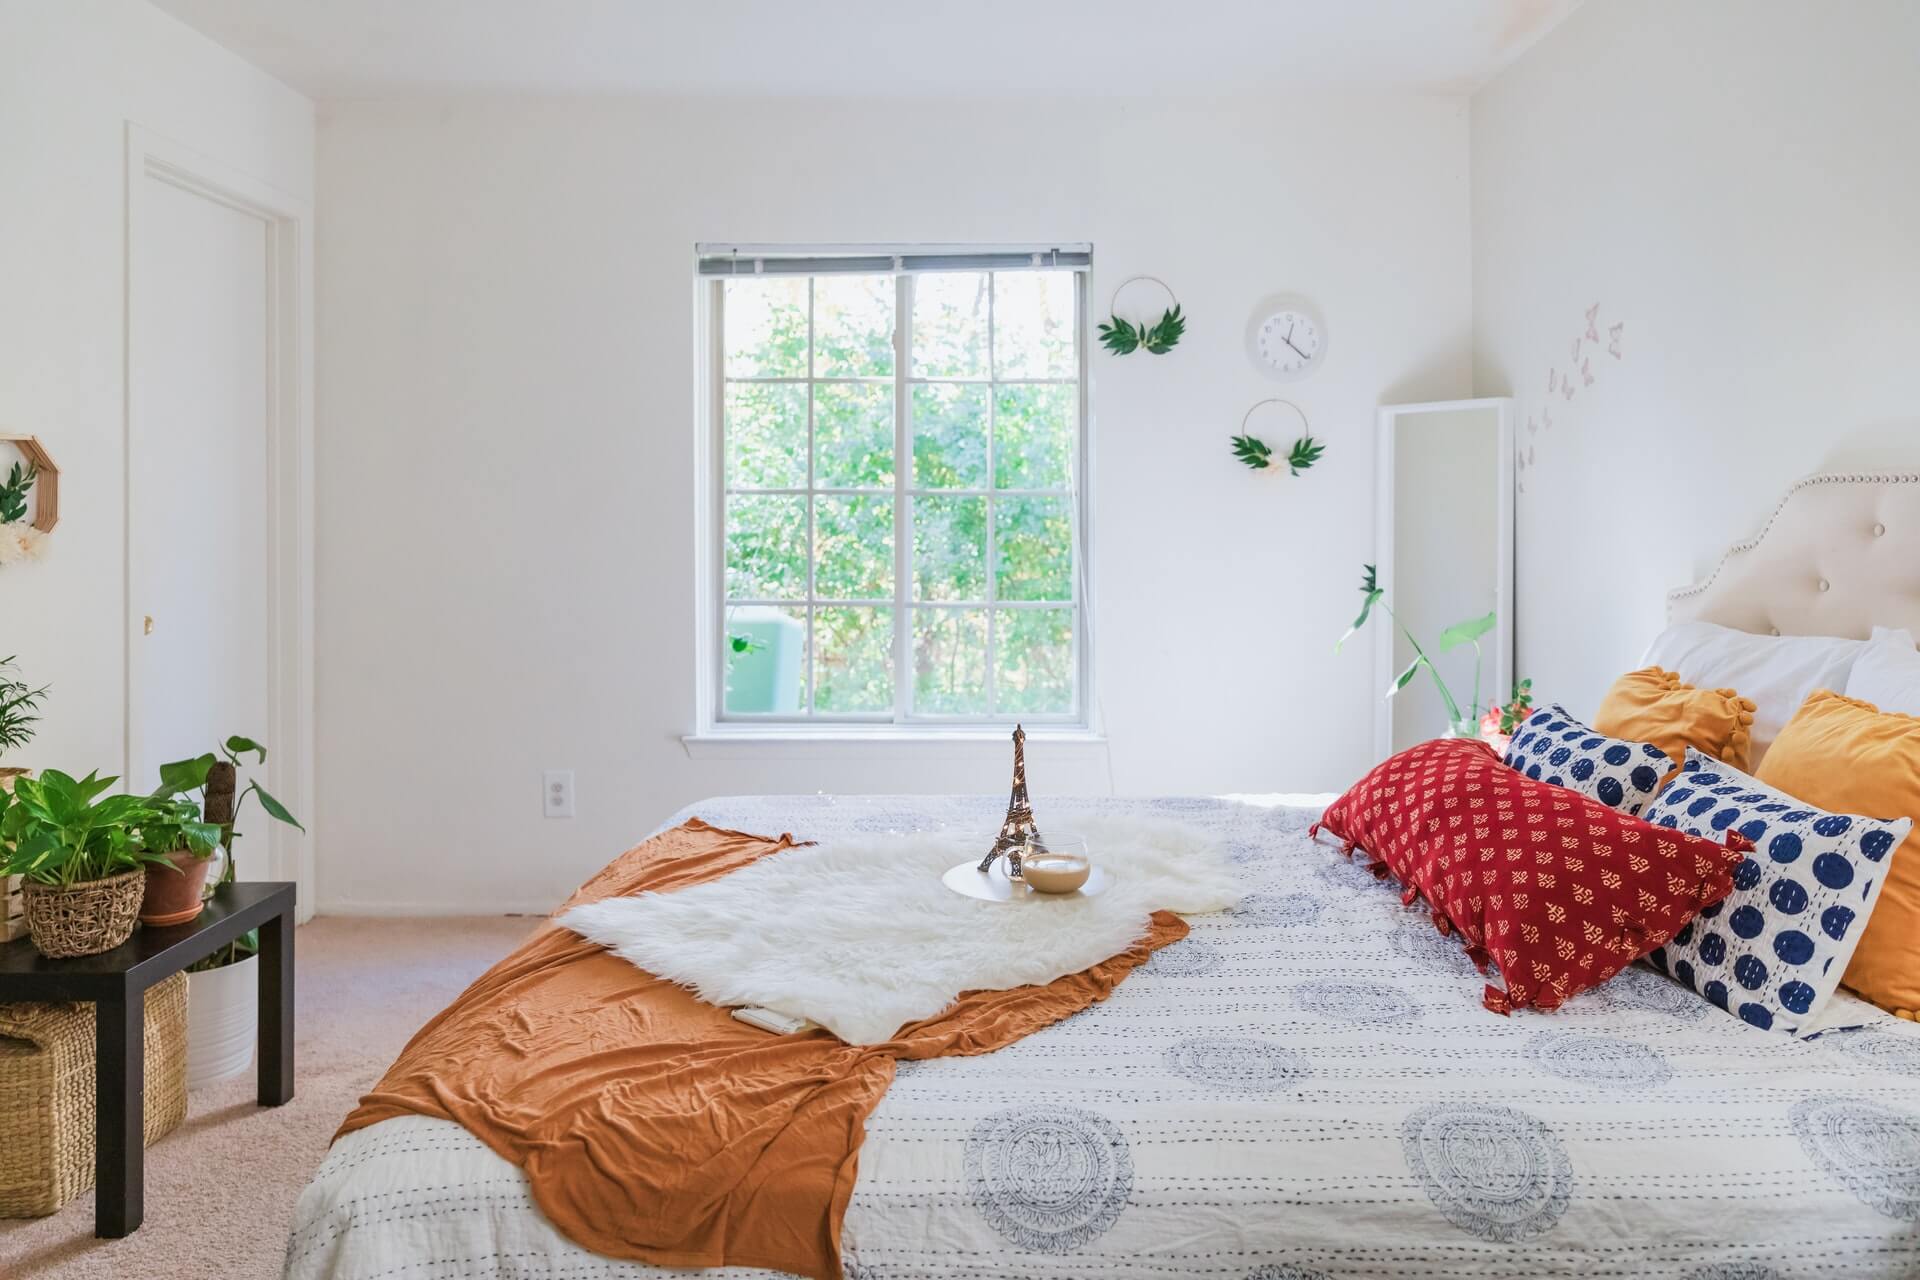 10 Small Living Room Decoration Ideas